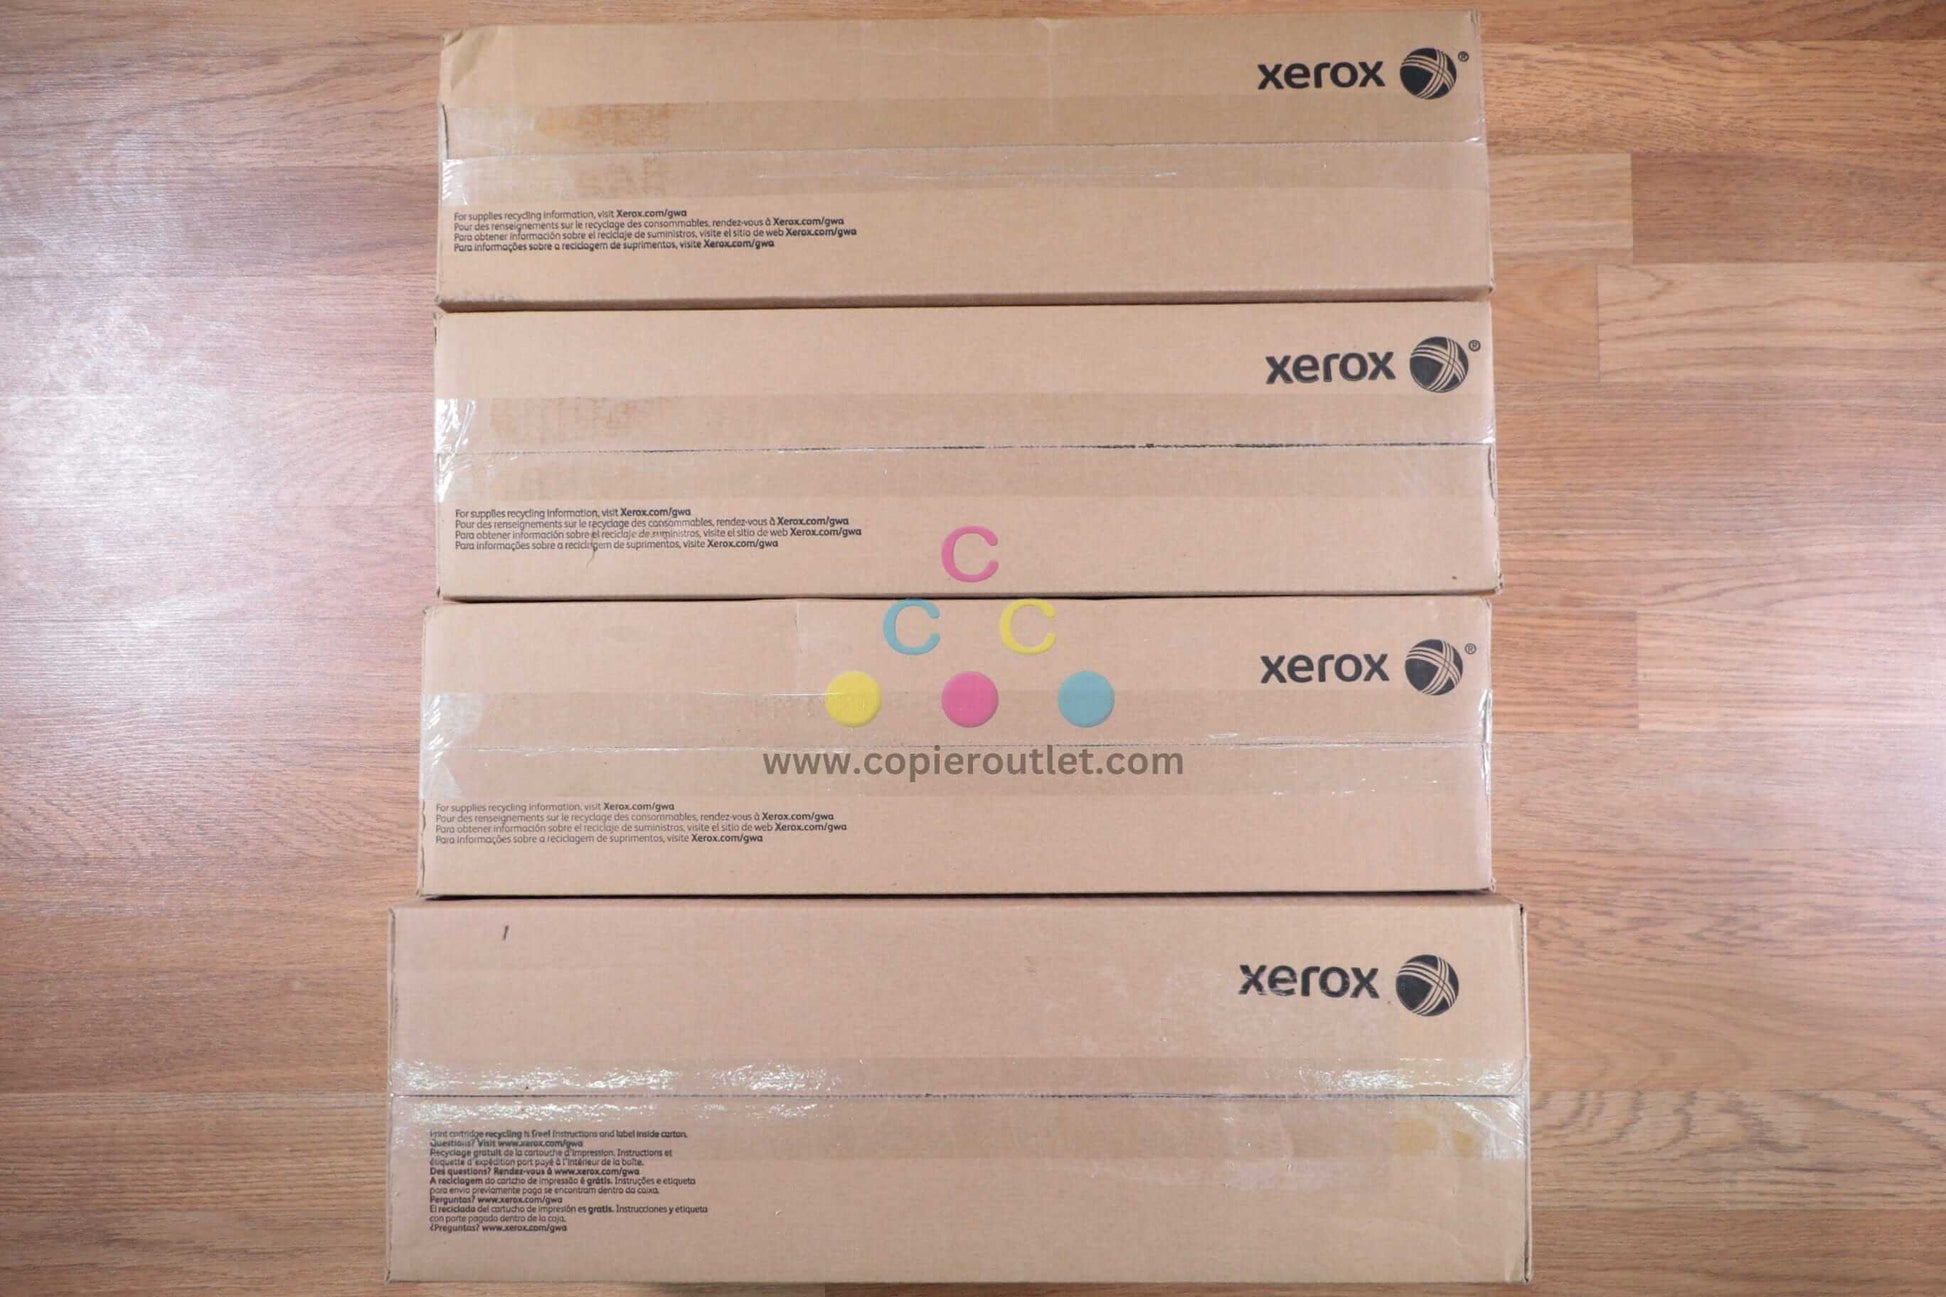 Lot of 4 Xerox 013R00655,56 Color Drum Cartridges Digital Color Press 700, 700i - copier-clearance-center